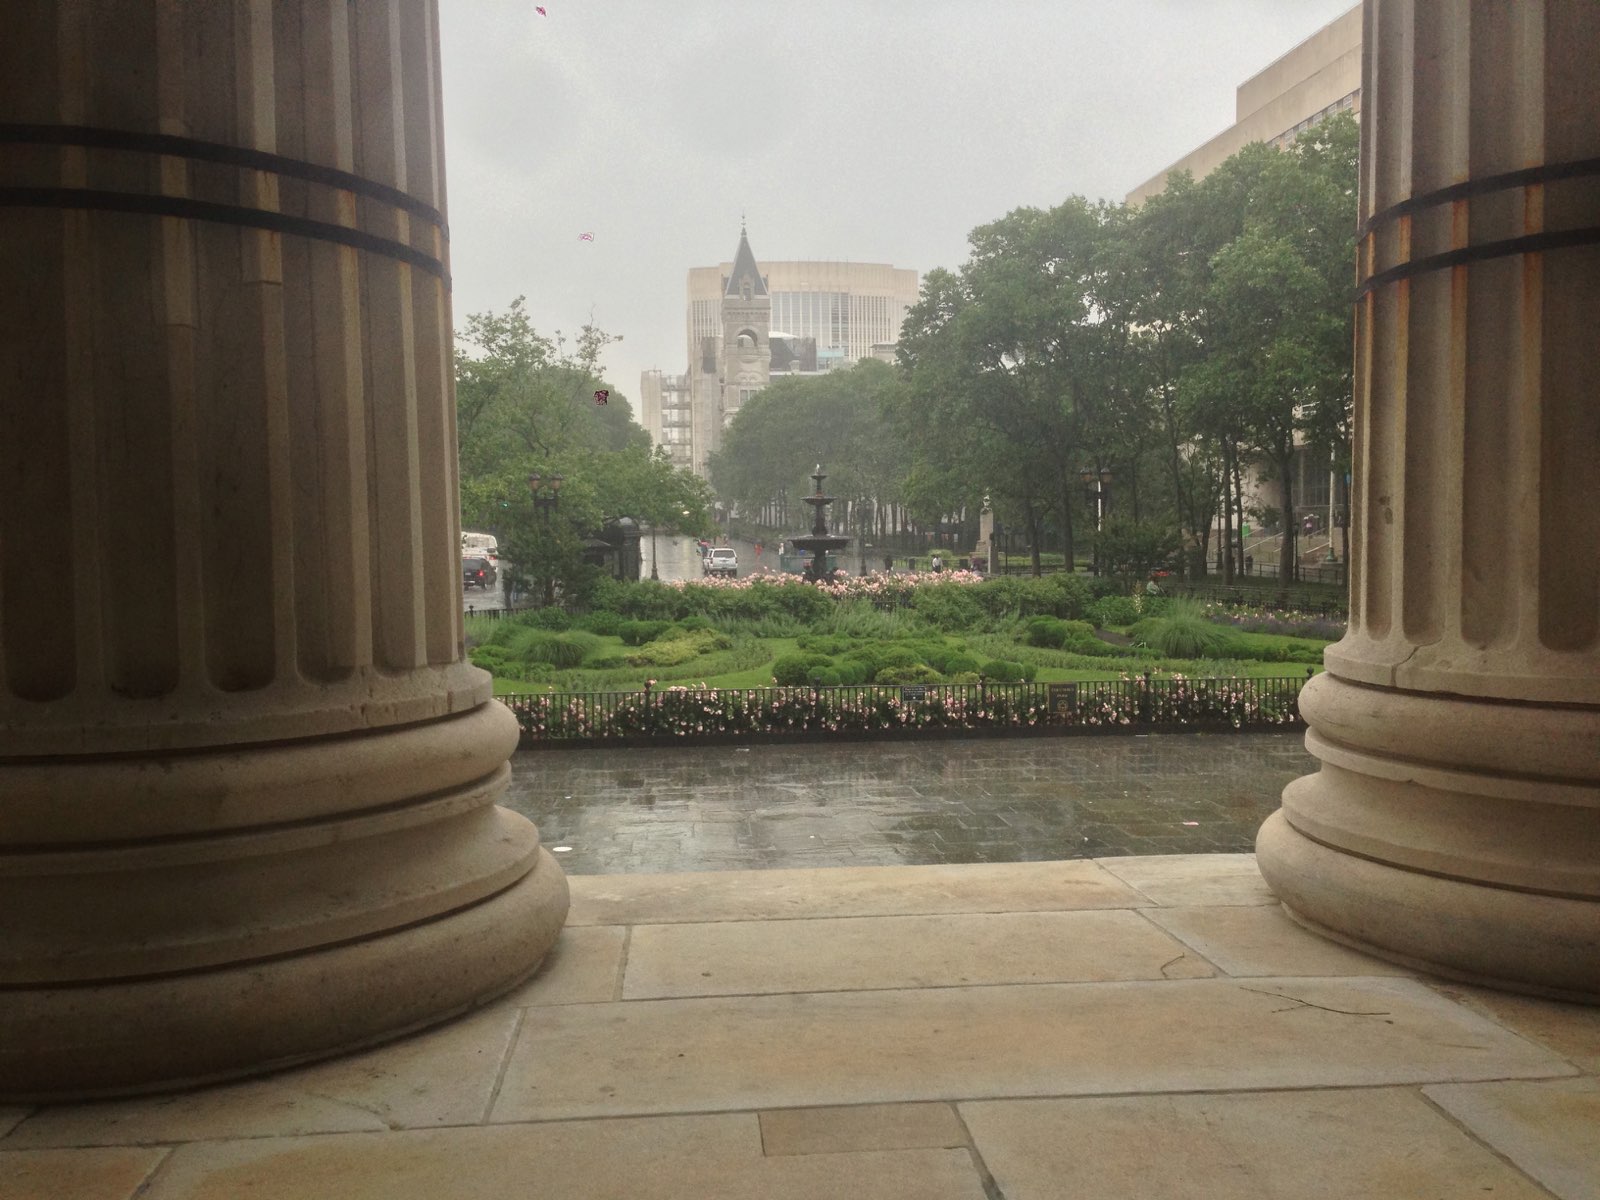 Rain and columns